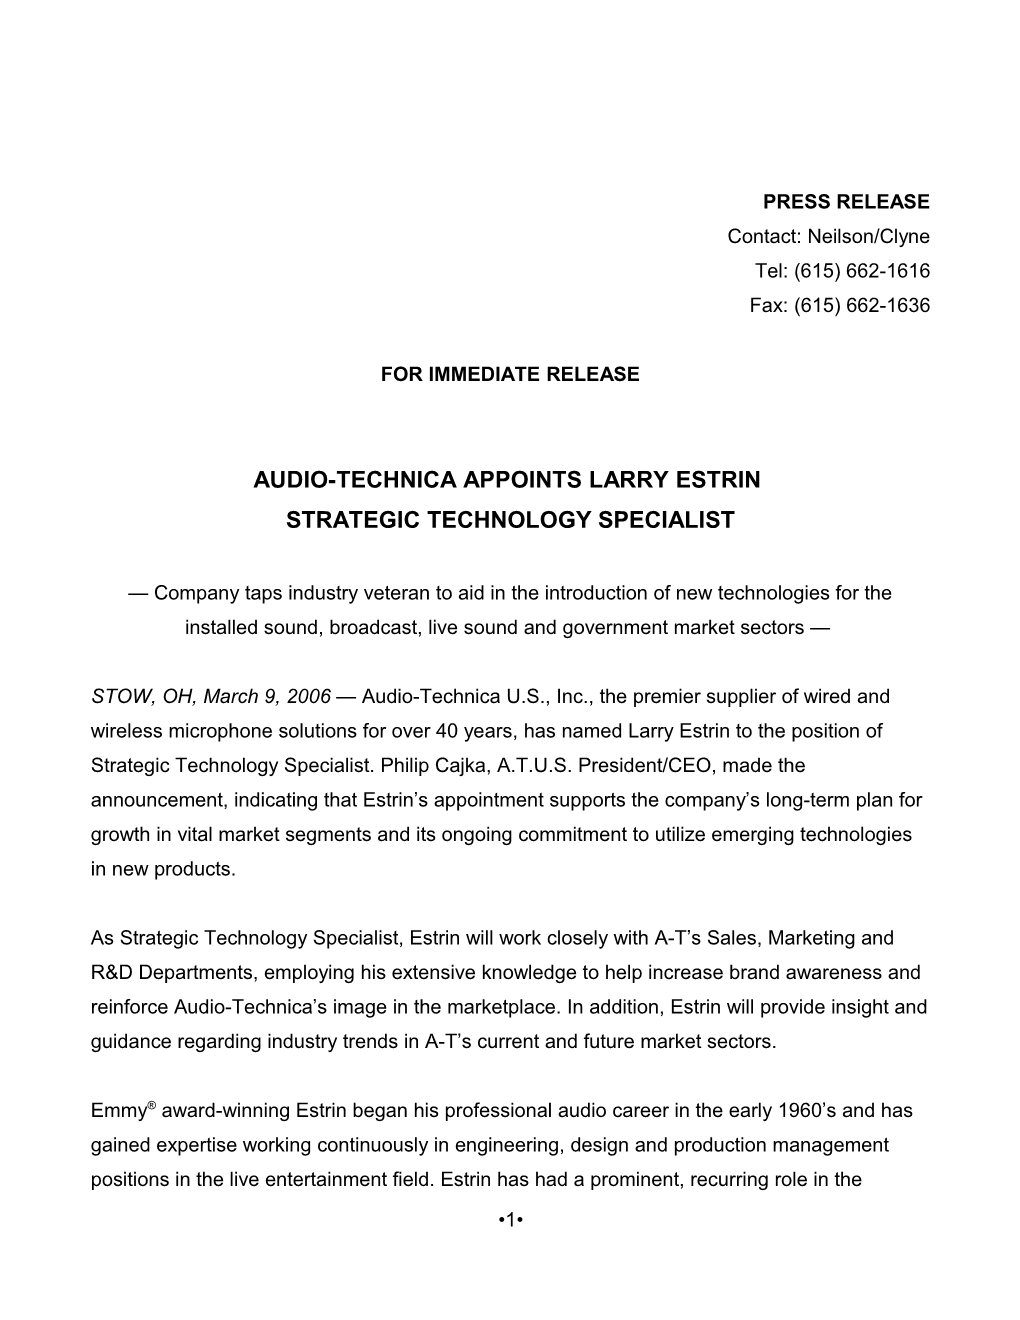 Audio-Technica Appoints Larry Estrin